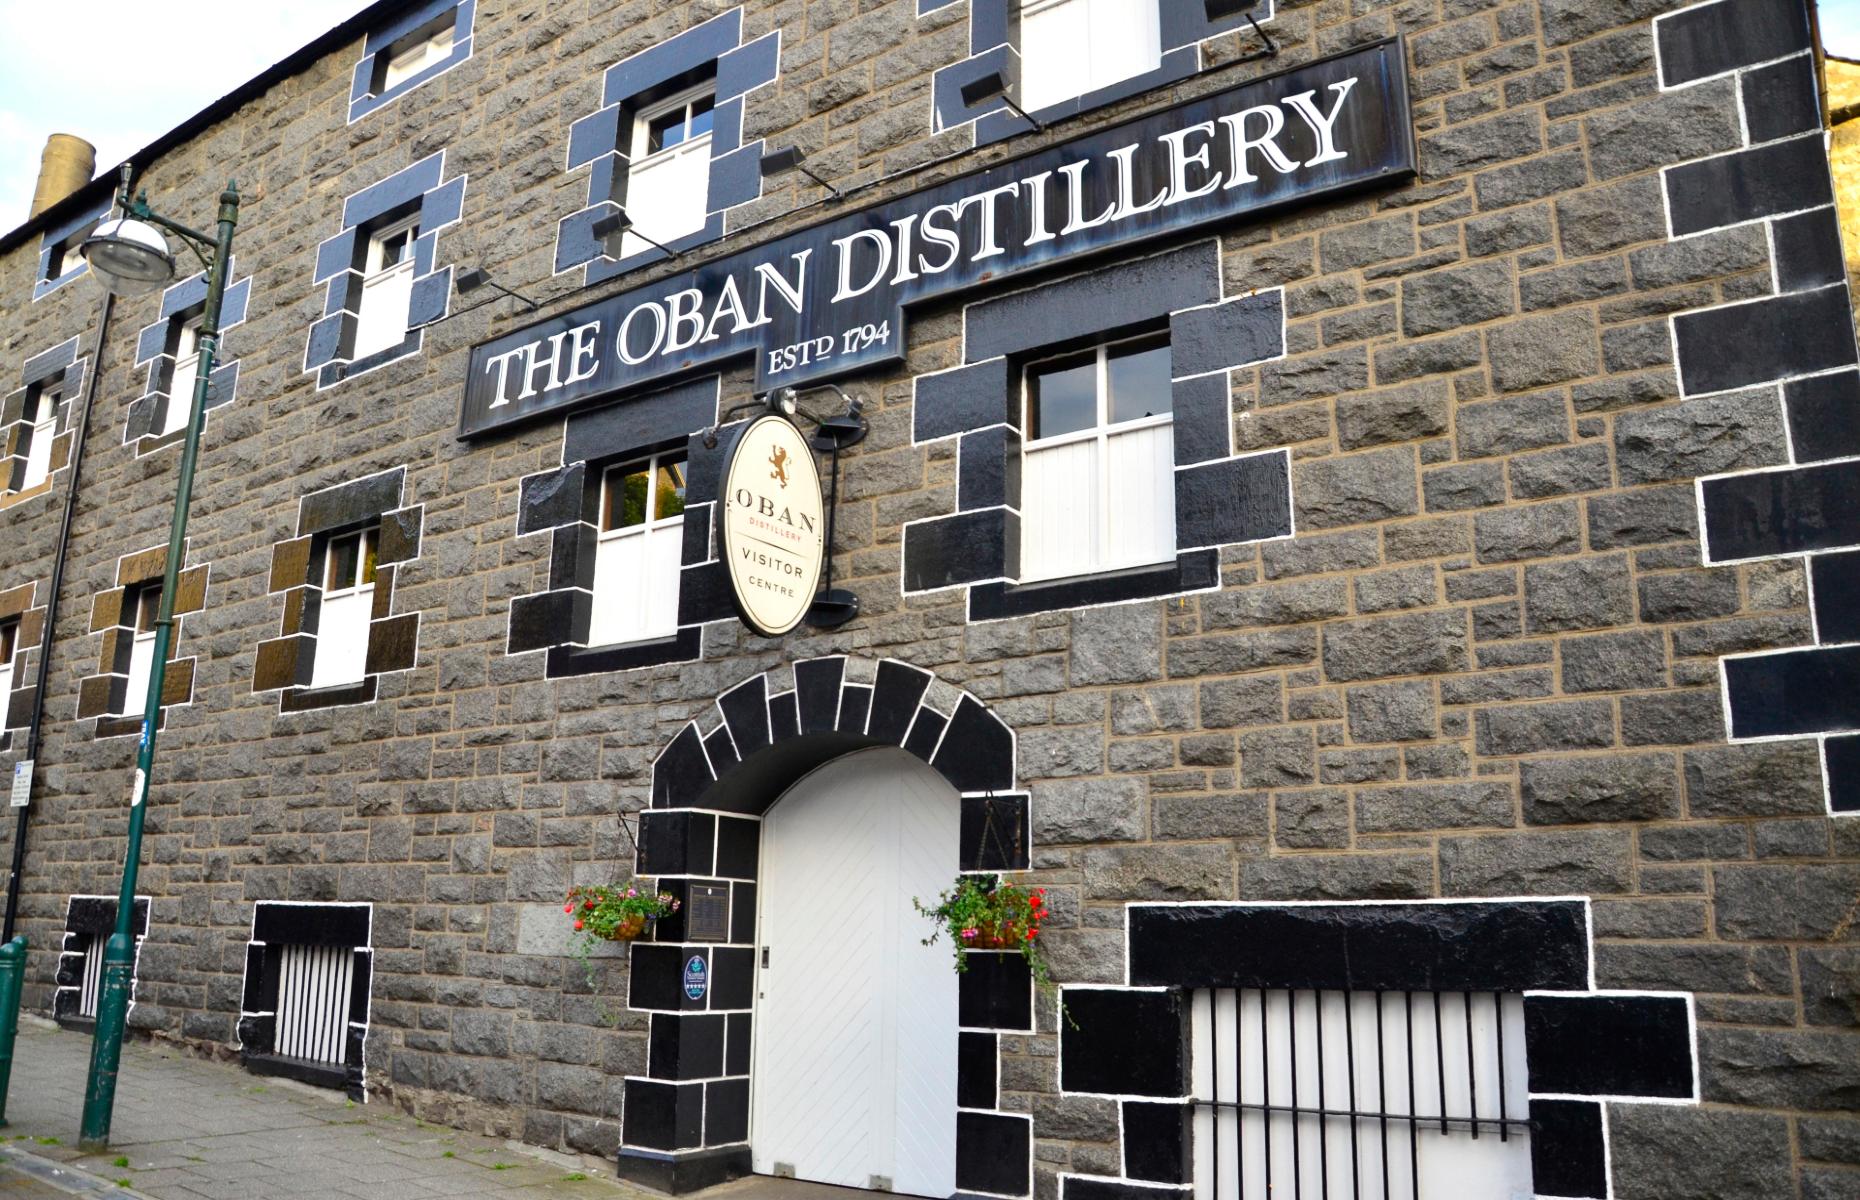 Oban Distillery (Image: Cath Harries/Alamy Stock Photo)